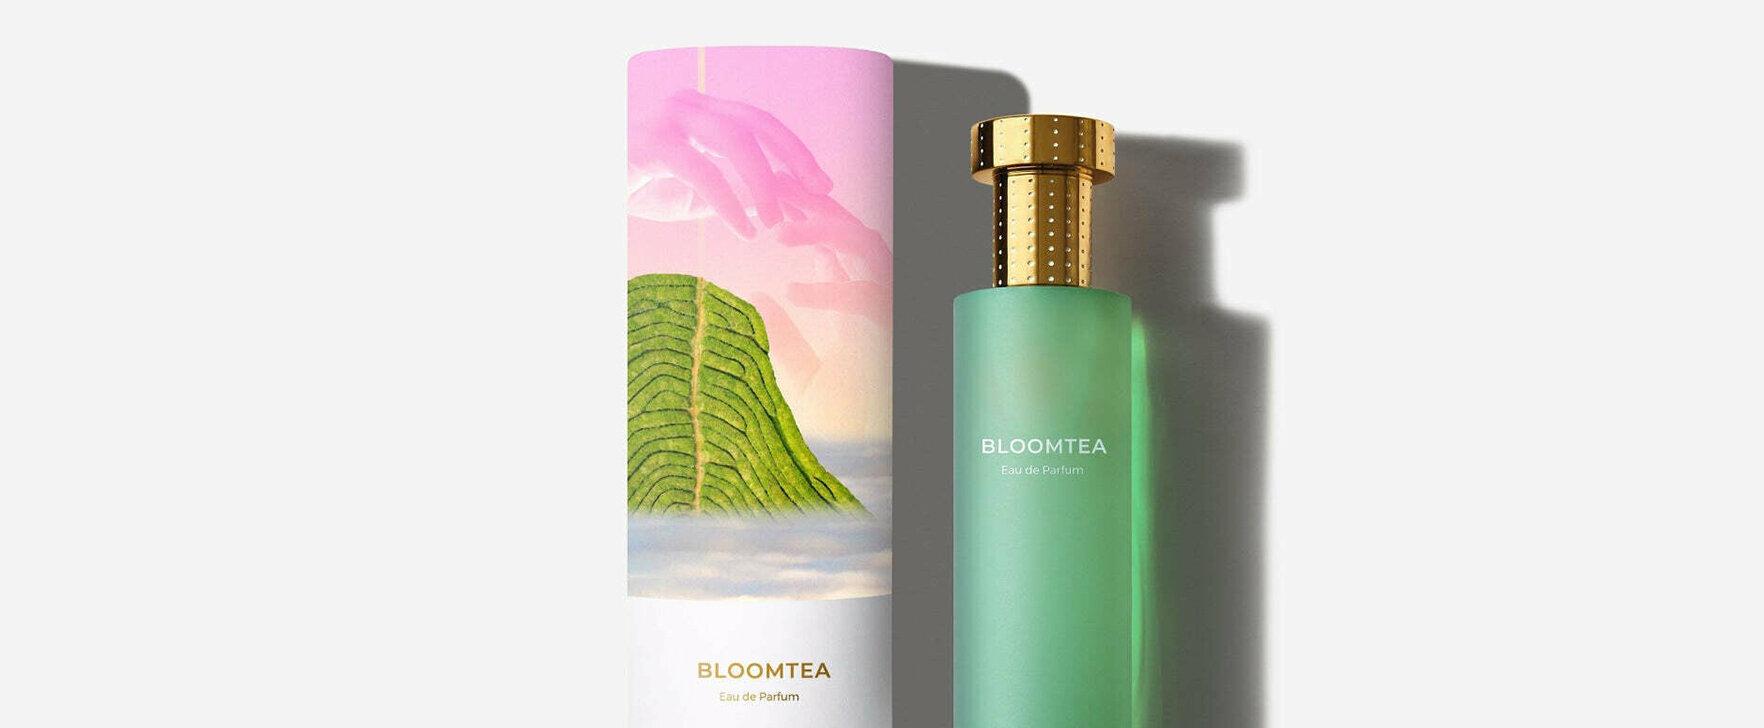 A Fragrance Journey Through Spring: The New "Bloomtea" Eau de Parfum From Hermetica